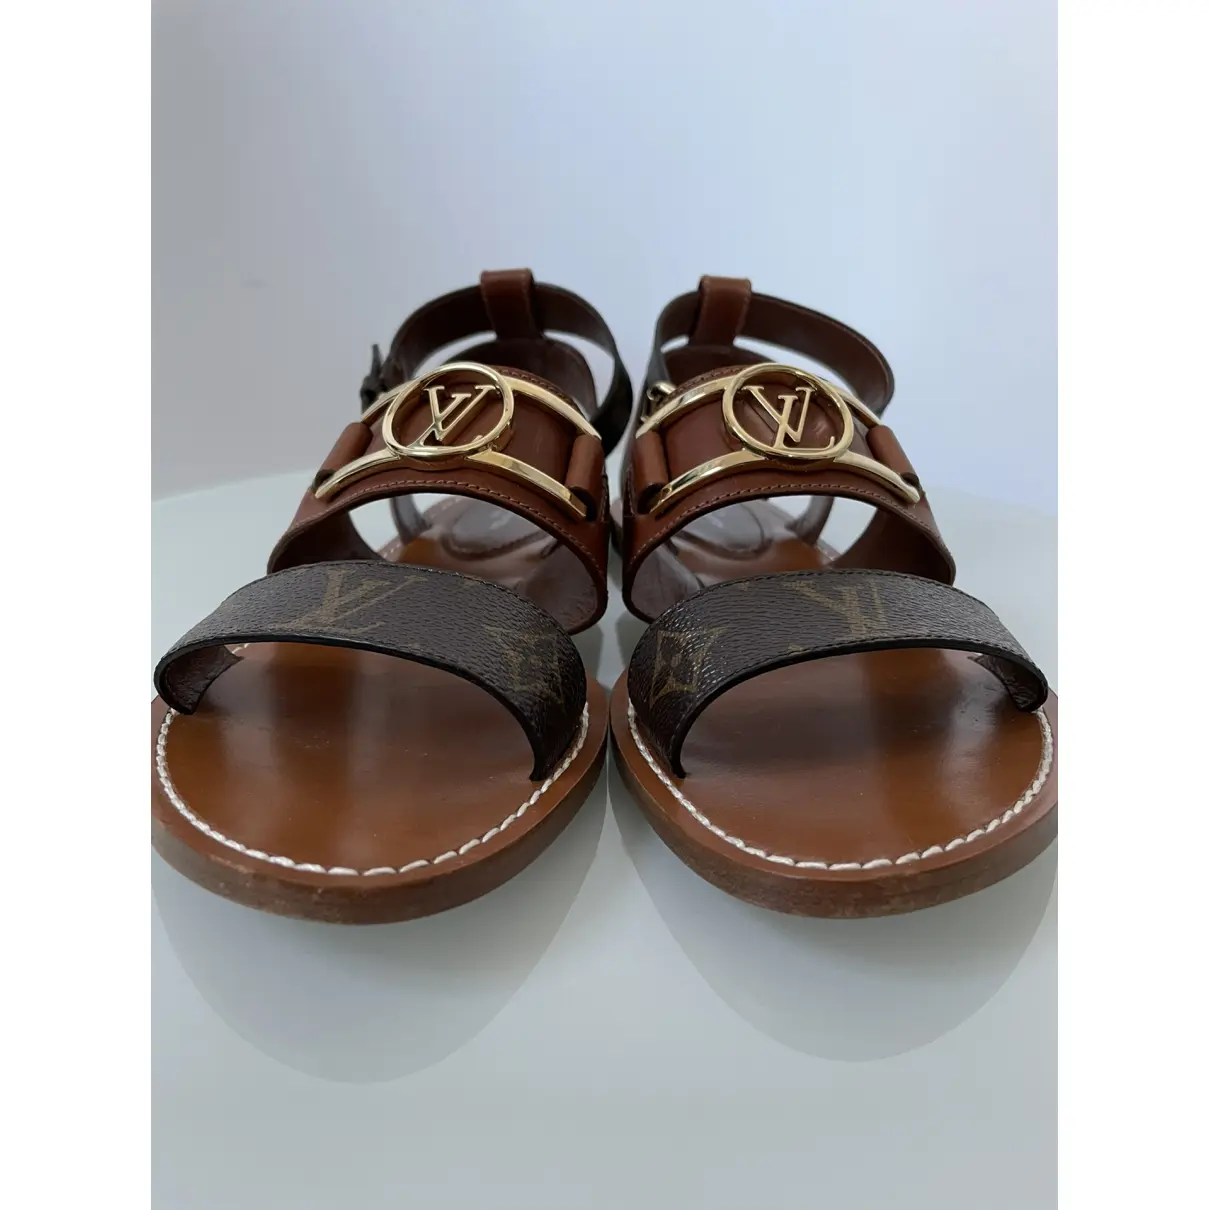 Buy Louis Vuitton Academy leather sandal online